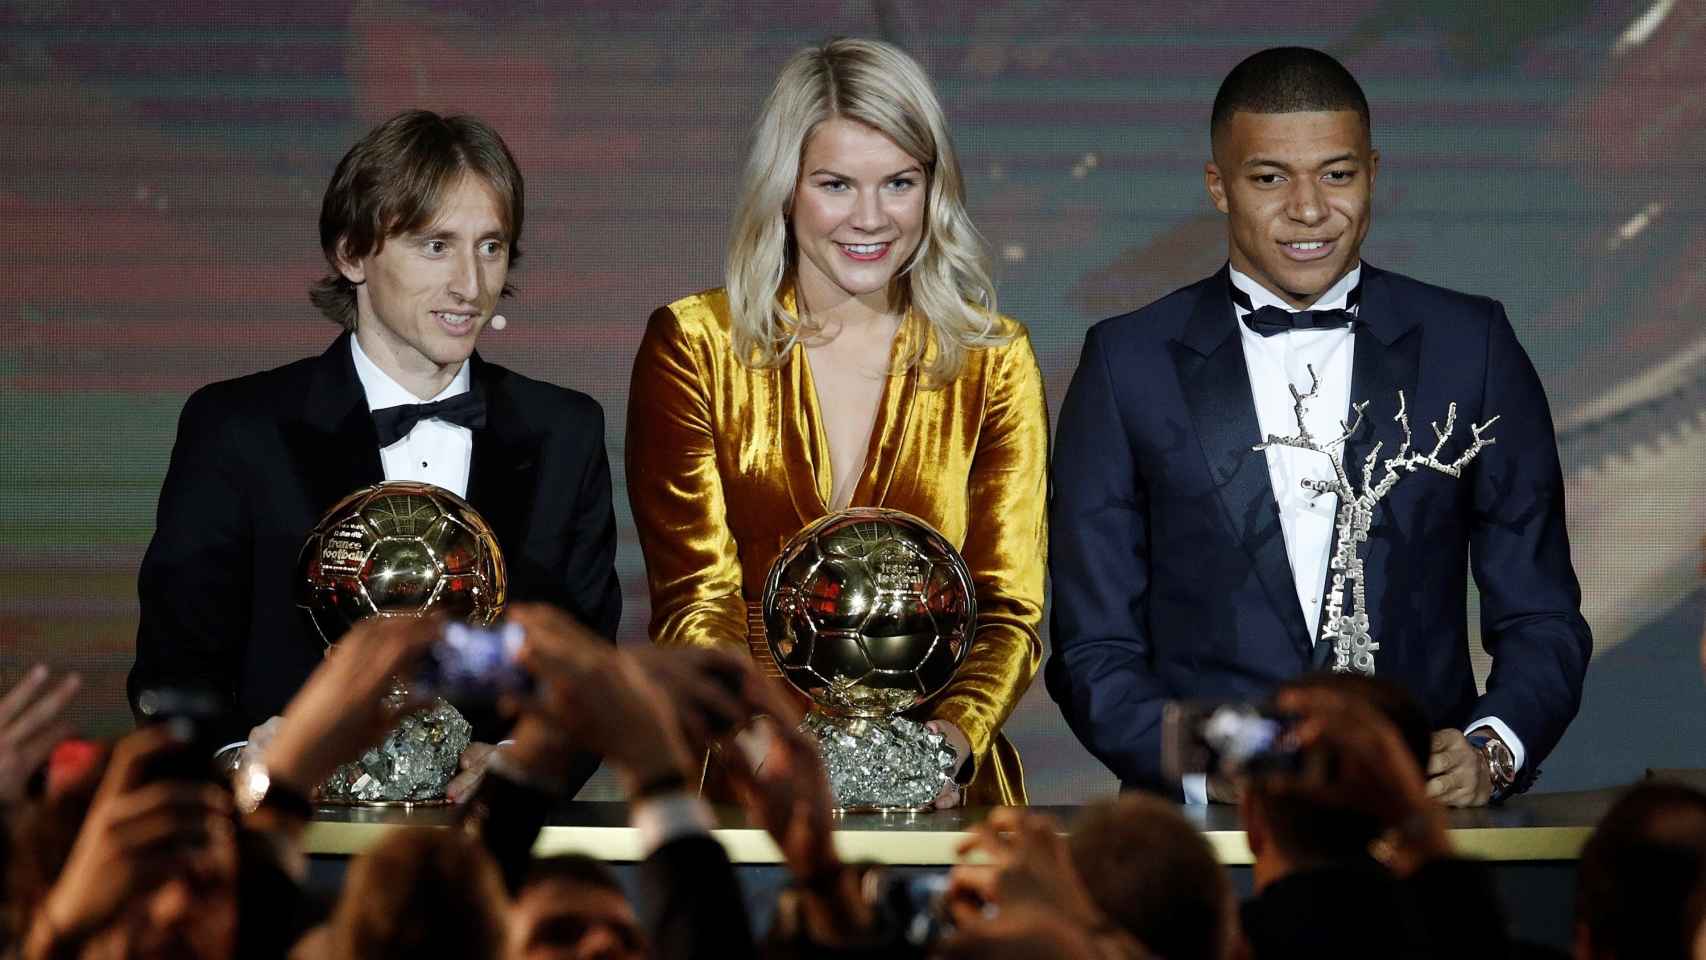 Luka Modric del Real Madrid, Ada Hegerberg del Olympique Lyonnais, y Kylian Mbappe del Paris St Germain